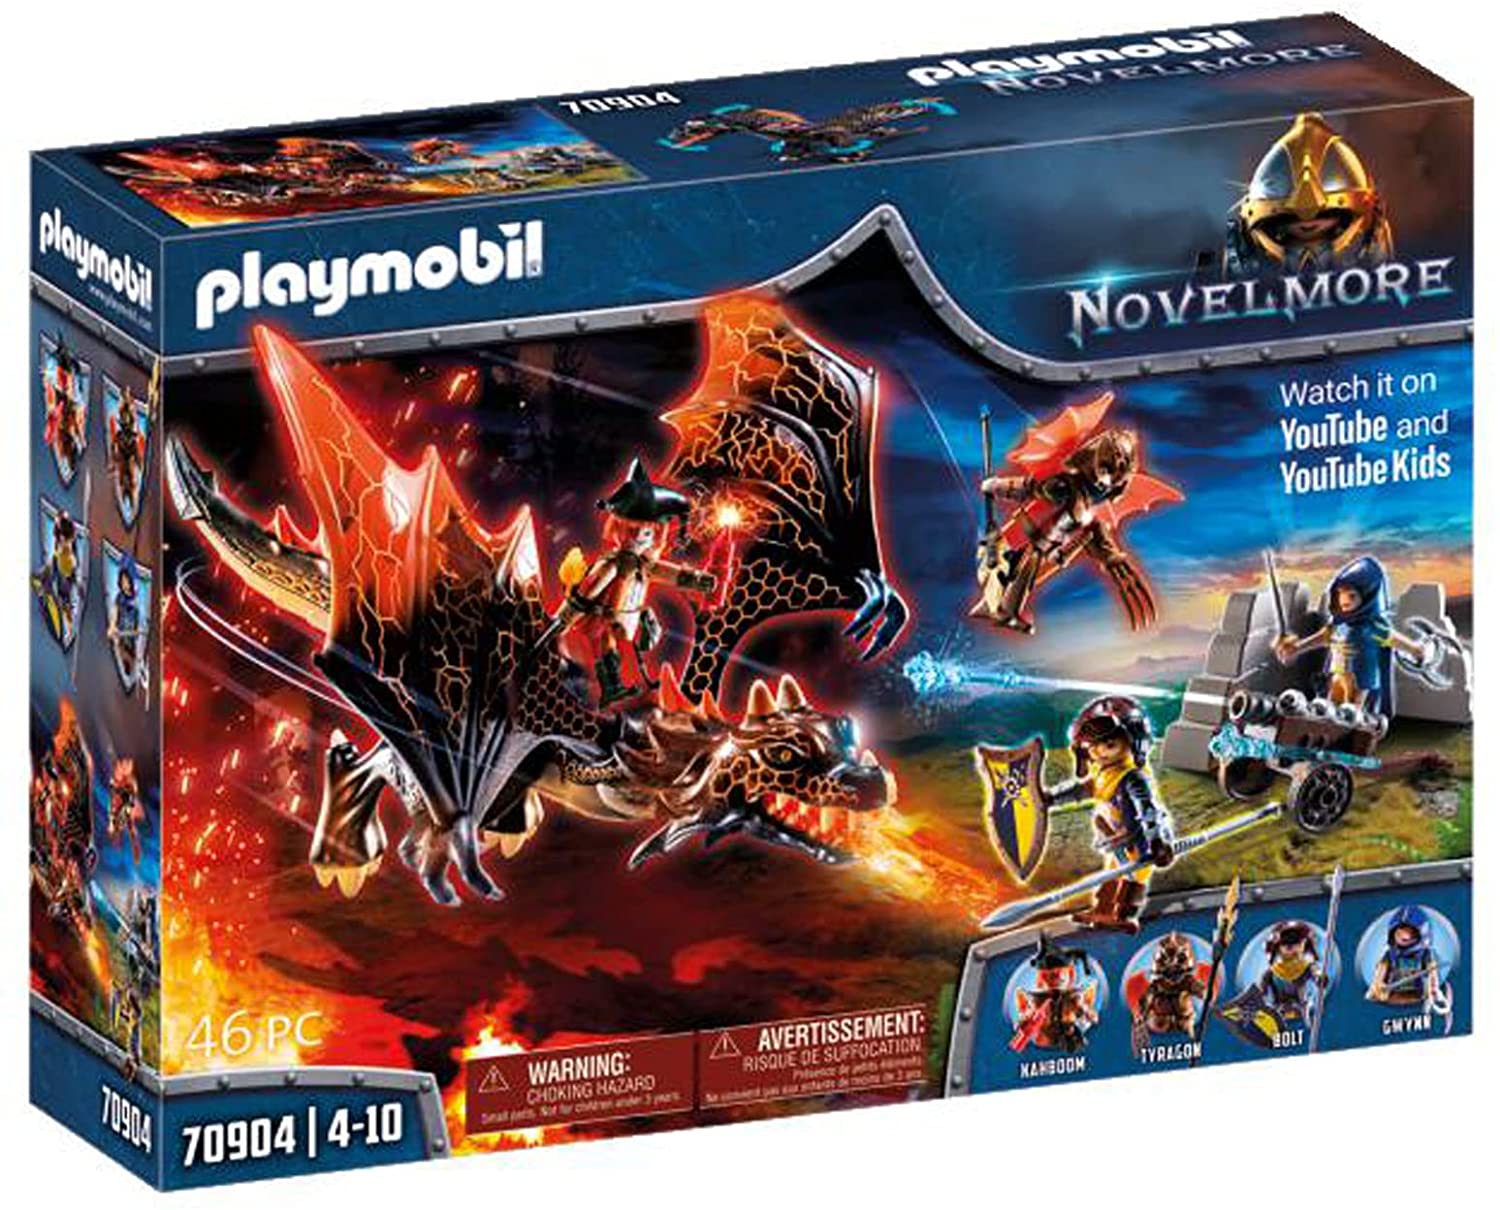 Playmobil Novelmore Dragon Attack